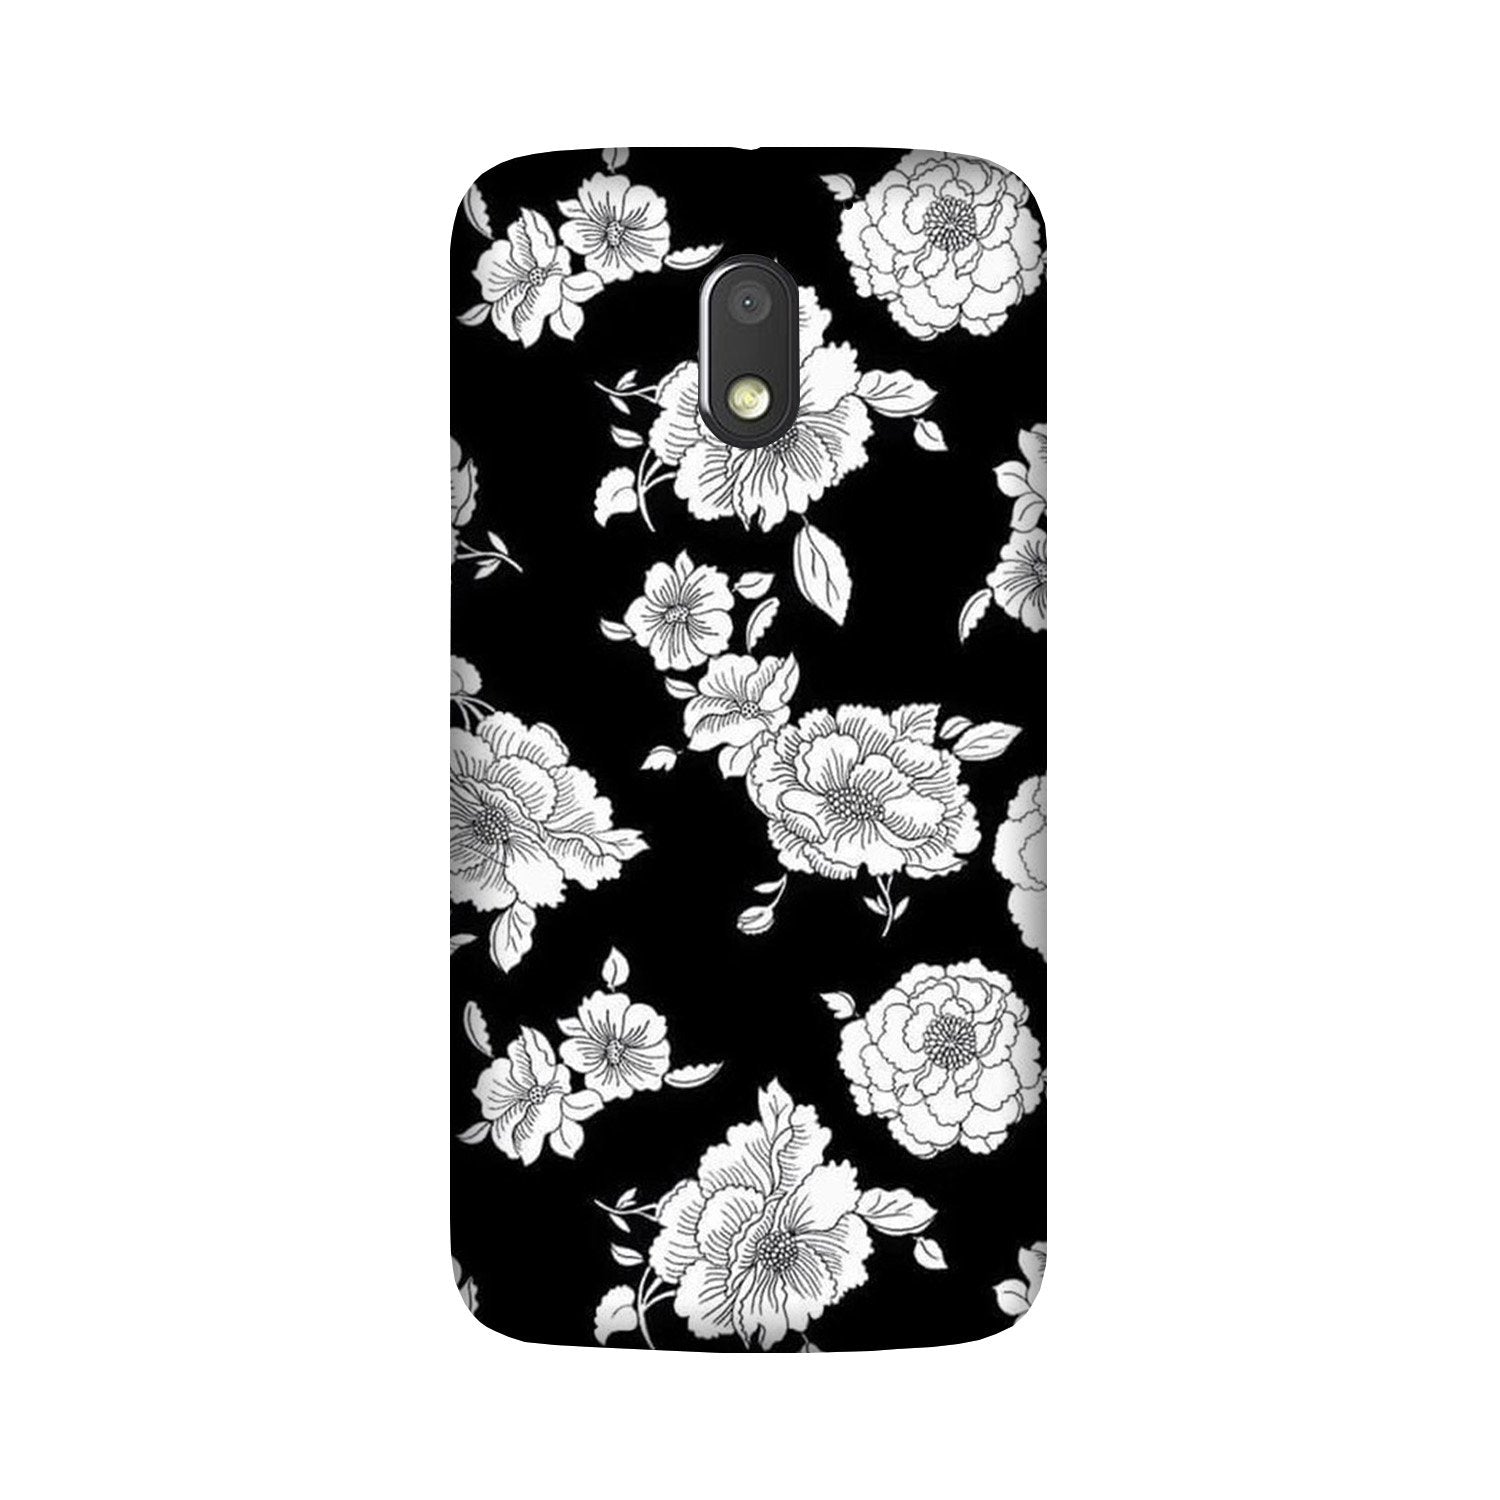 White flowers Black Background Case for Moto G4 Play